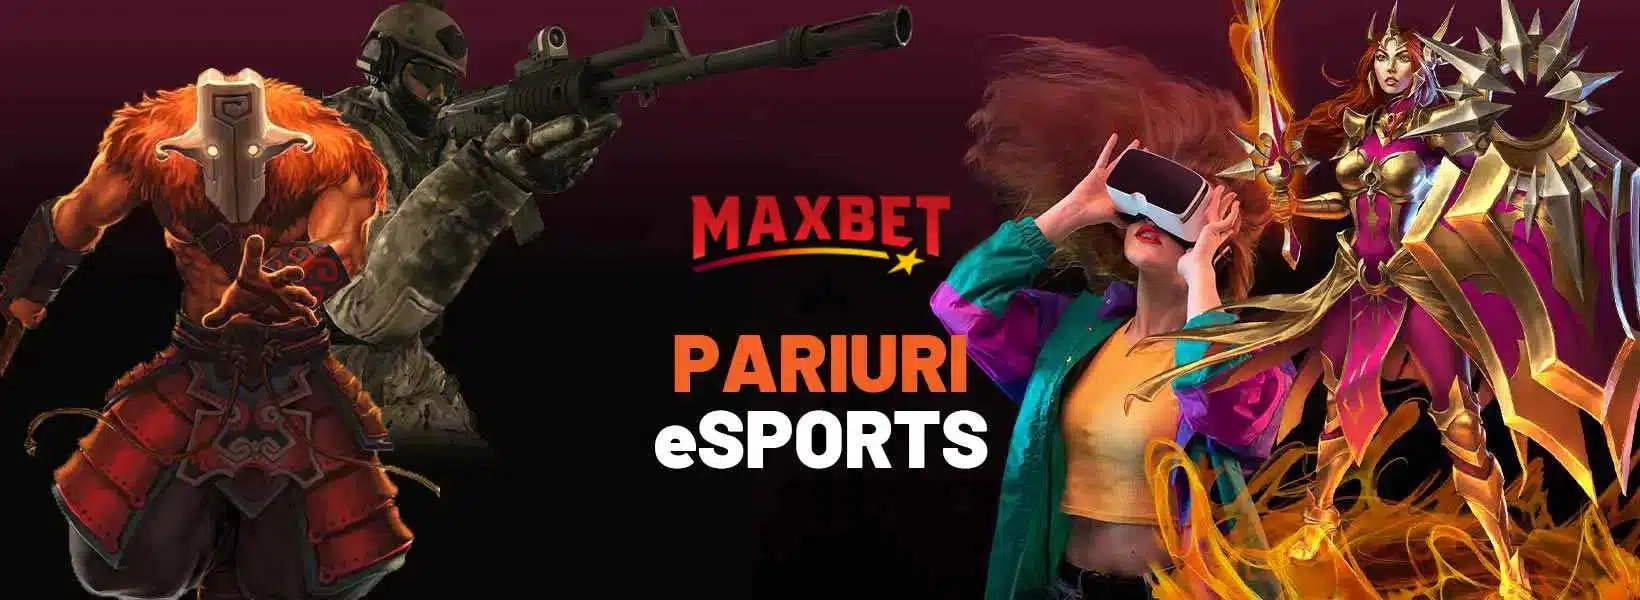 maxbet esports